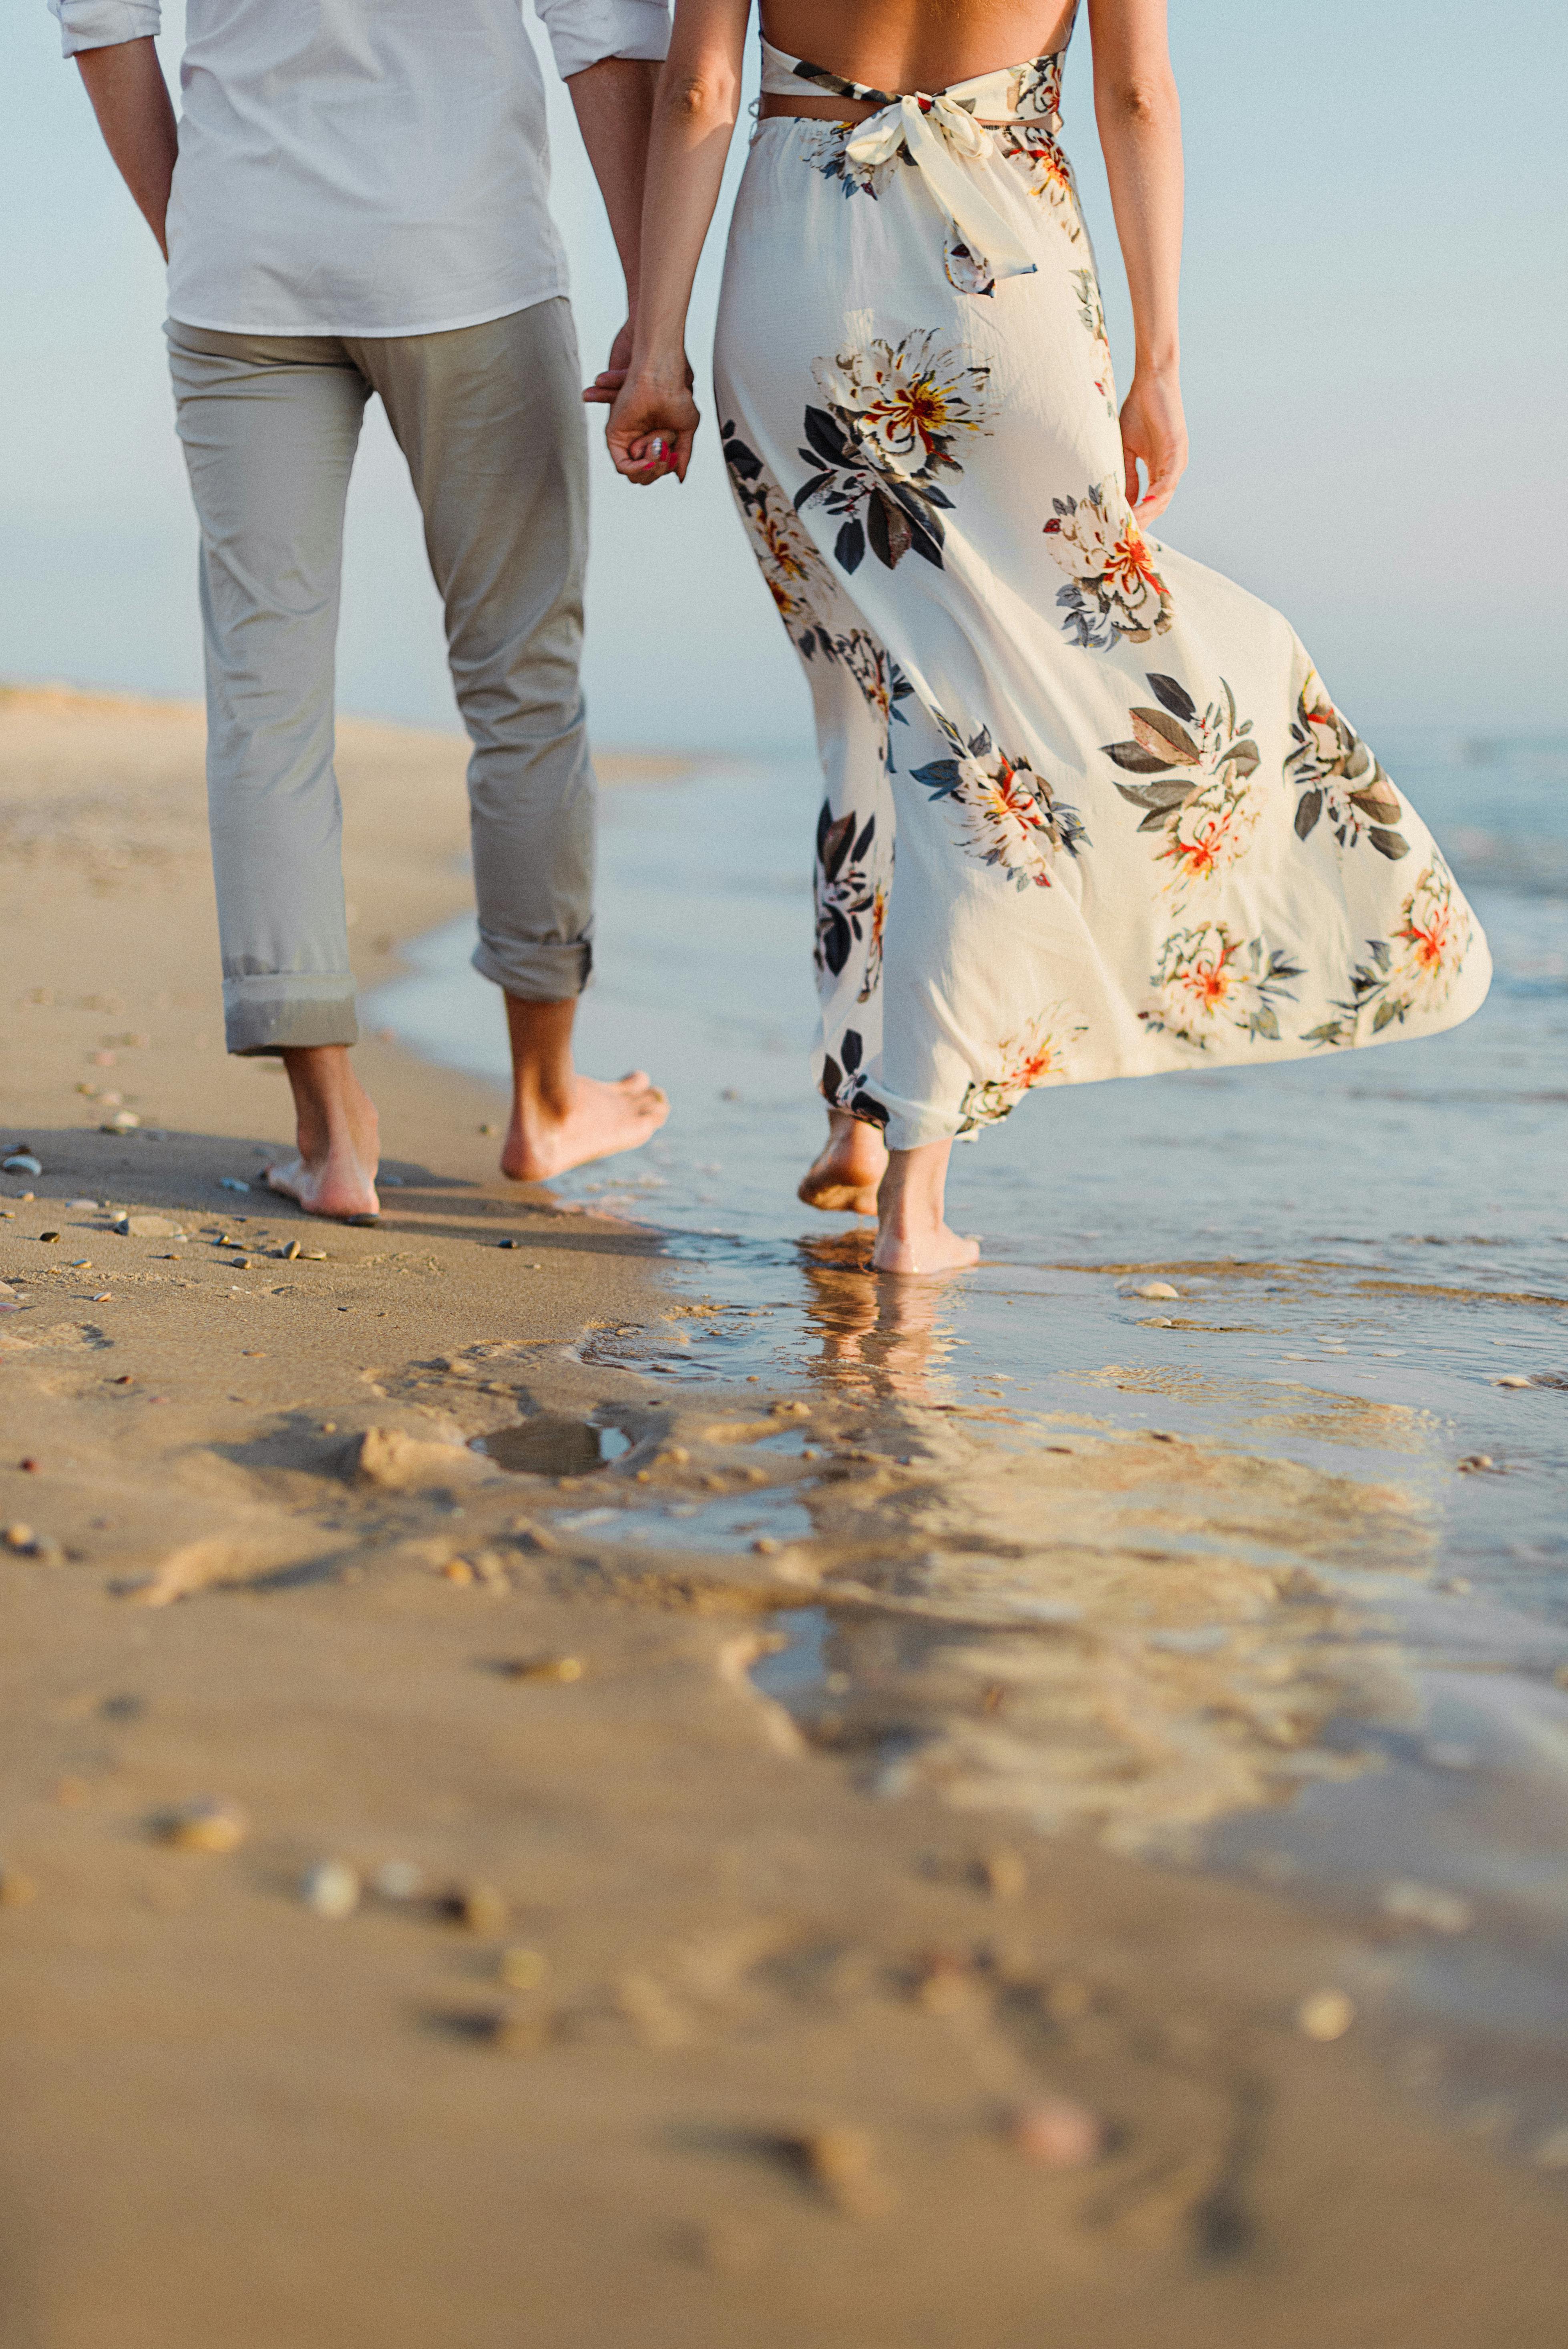 A couple walking along a beach | Source: Pexels